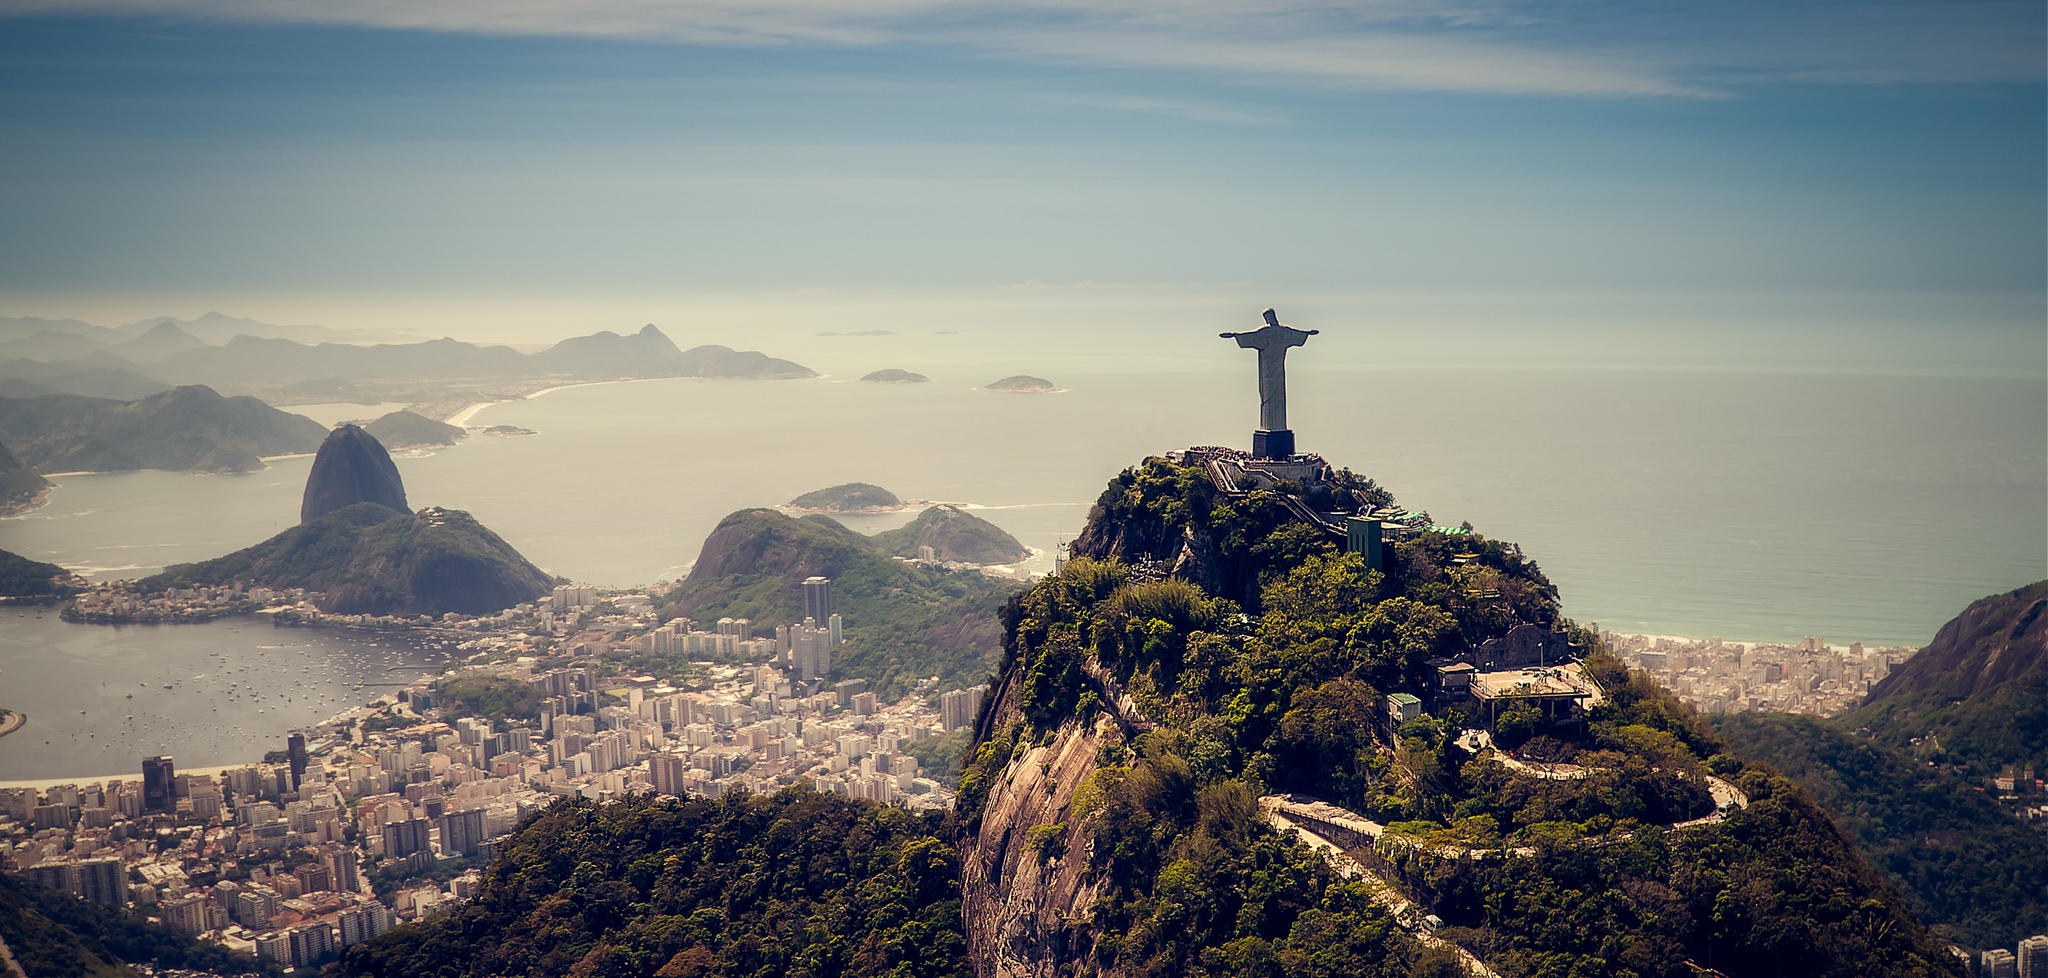 40 Photos That Will Make You Want To Visit Rio de Janeiro